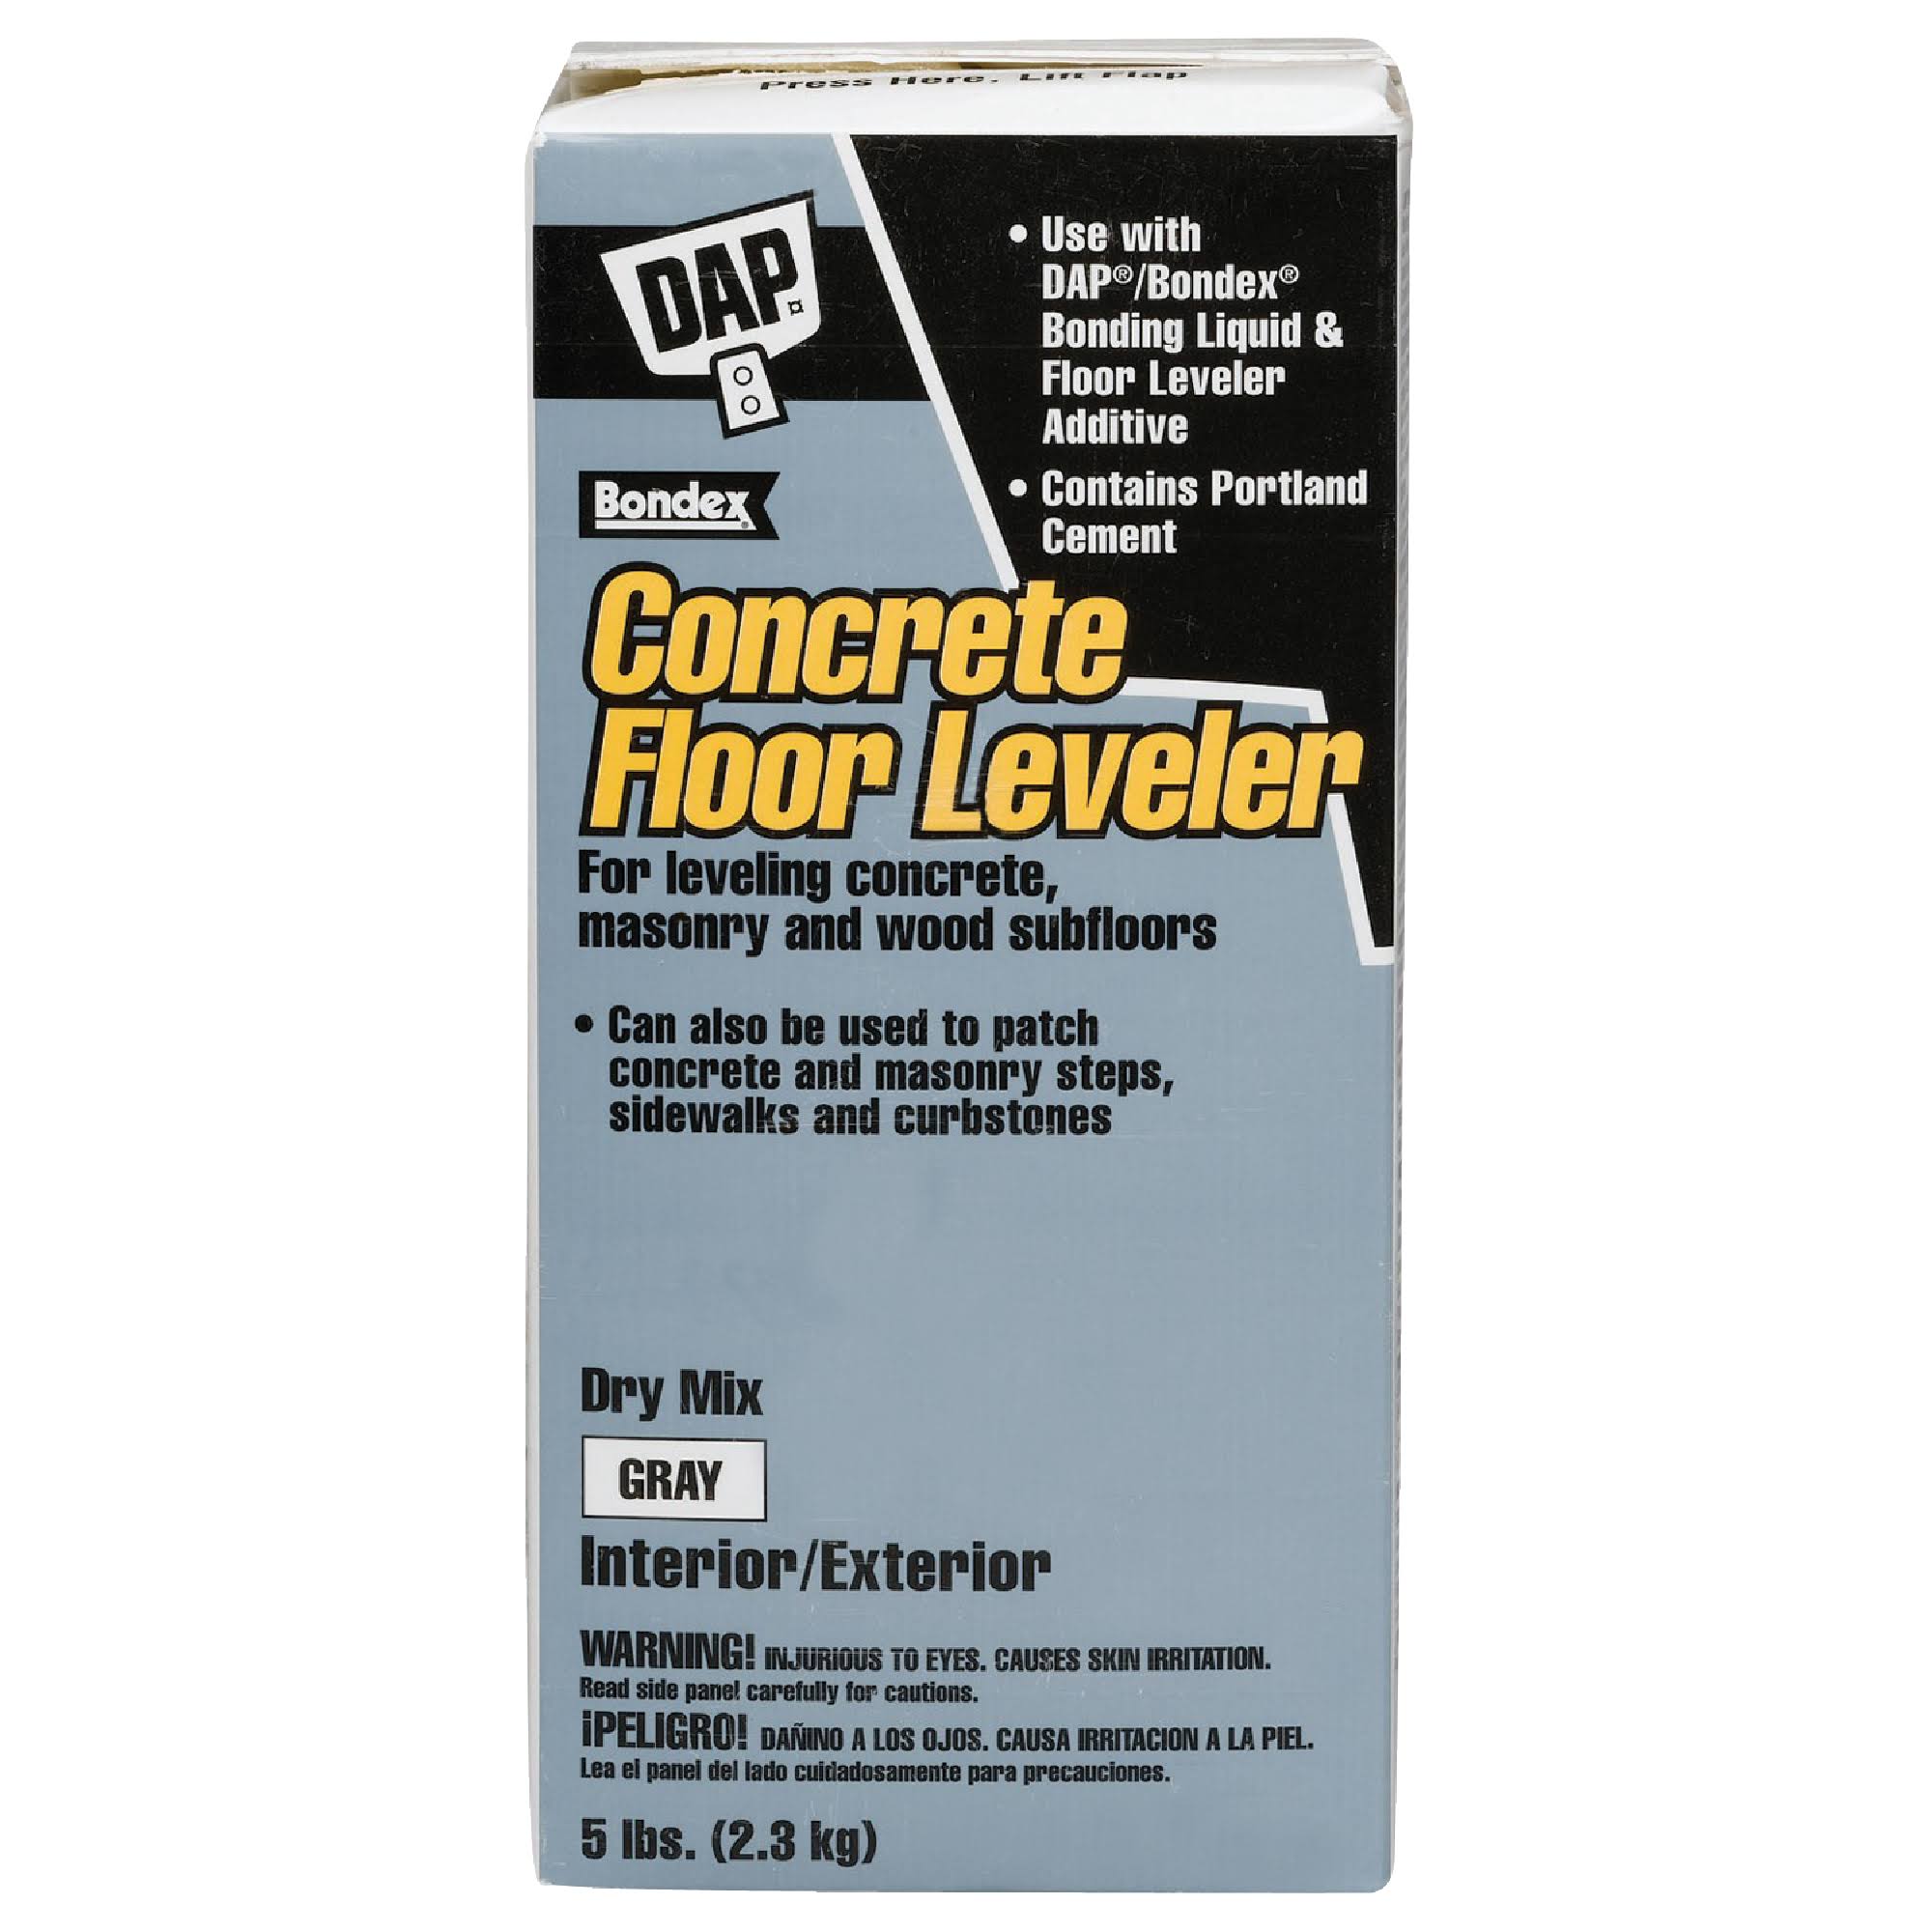 Dap Bondex Concrete Floor Leveler 10414 - 5lbs, Gray